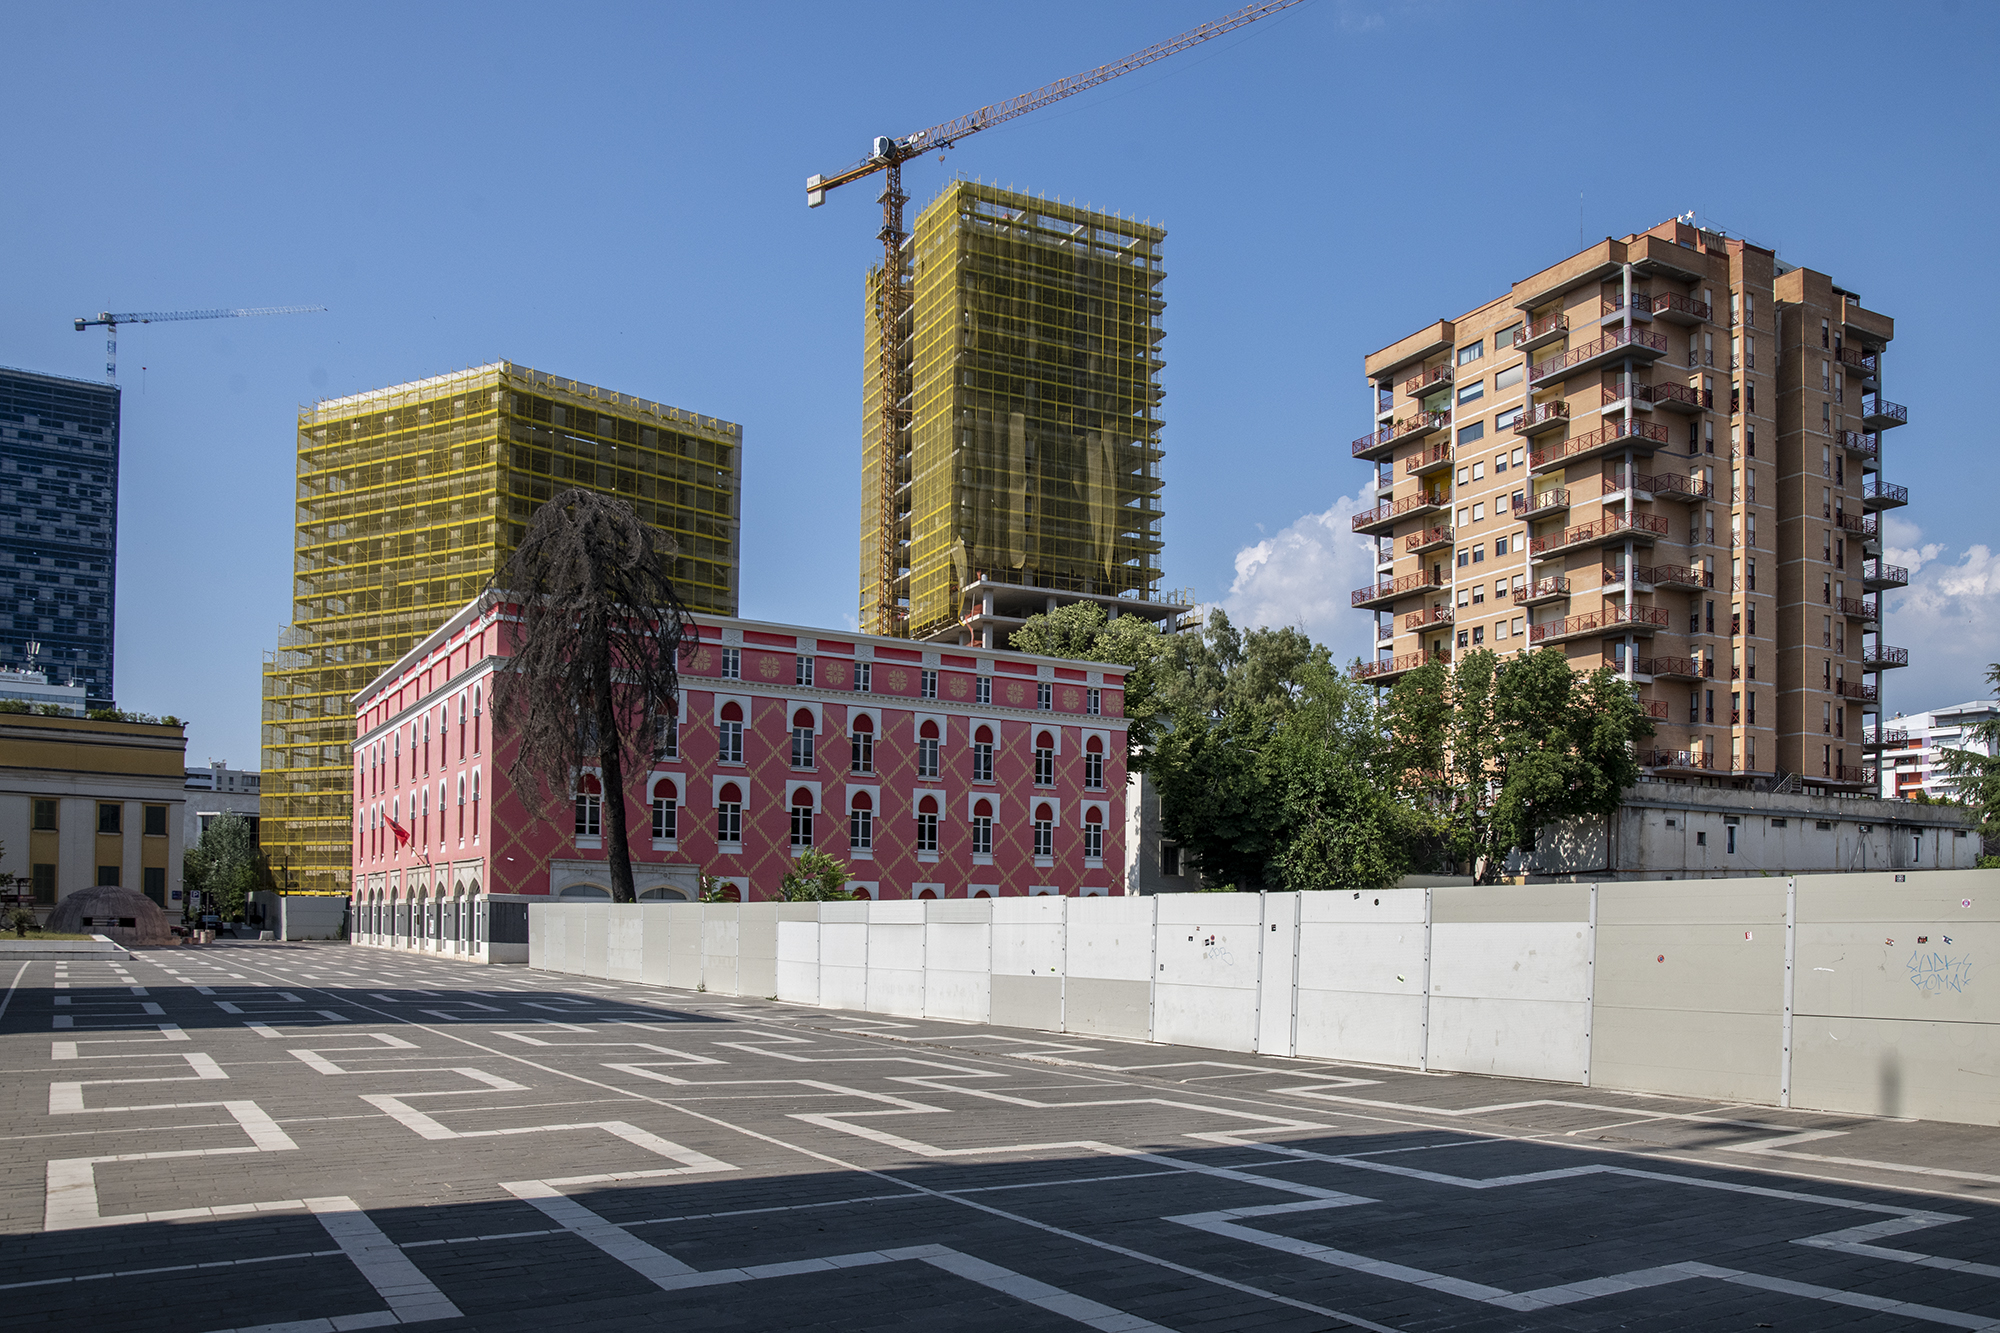 Is Tiranas rapid transformation progress or erasure?